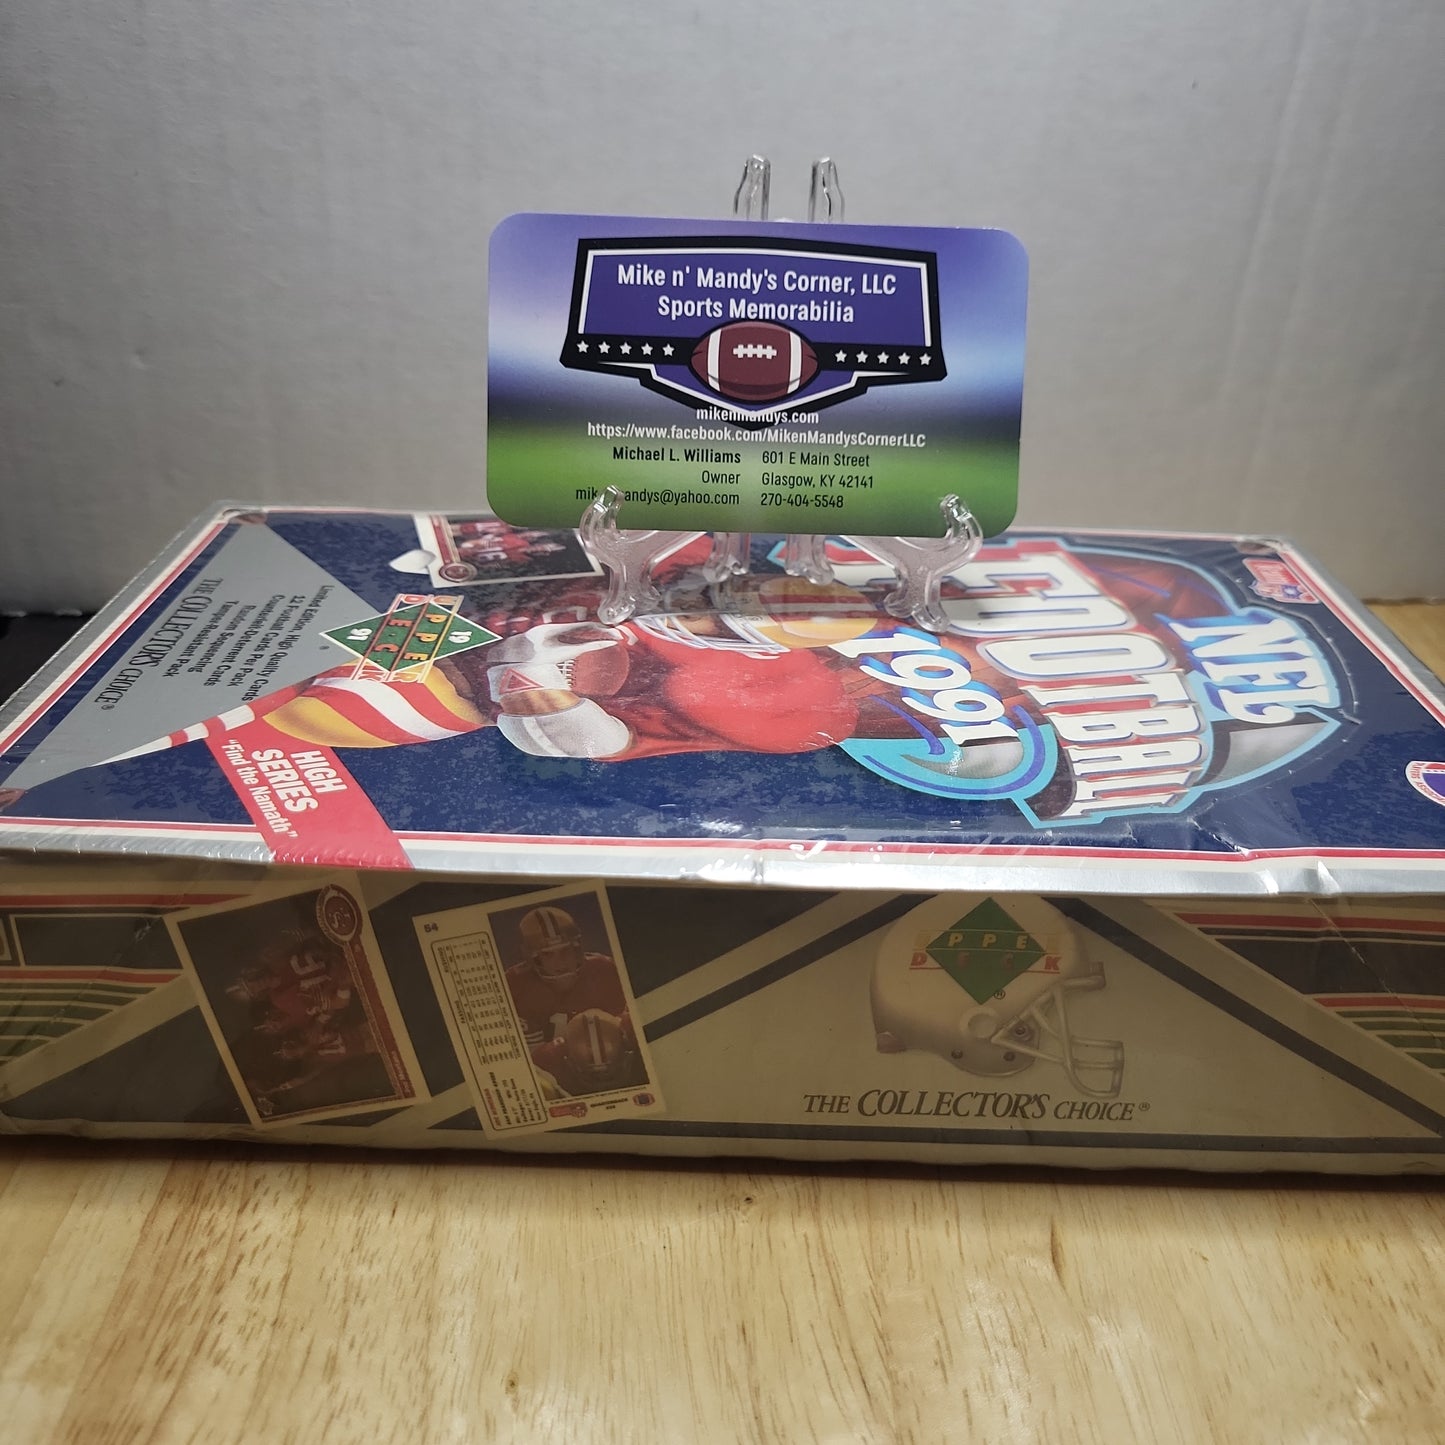 1991 Upper Deck Football The Collector's Choice High Series "Find The Namath" Wax Box